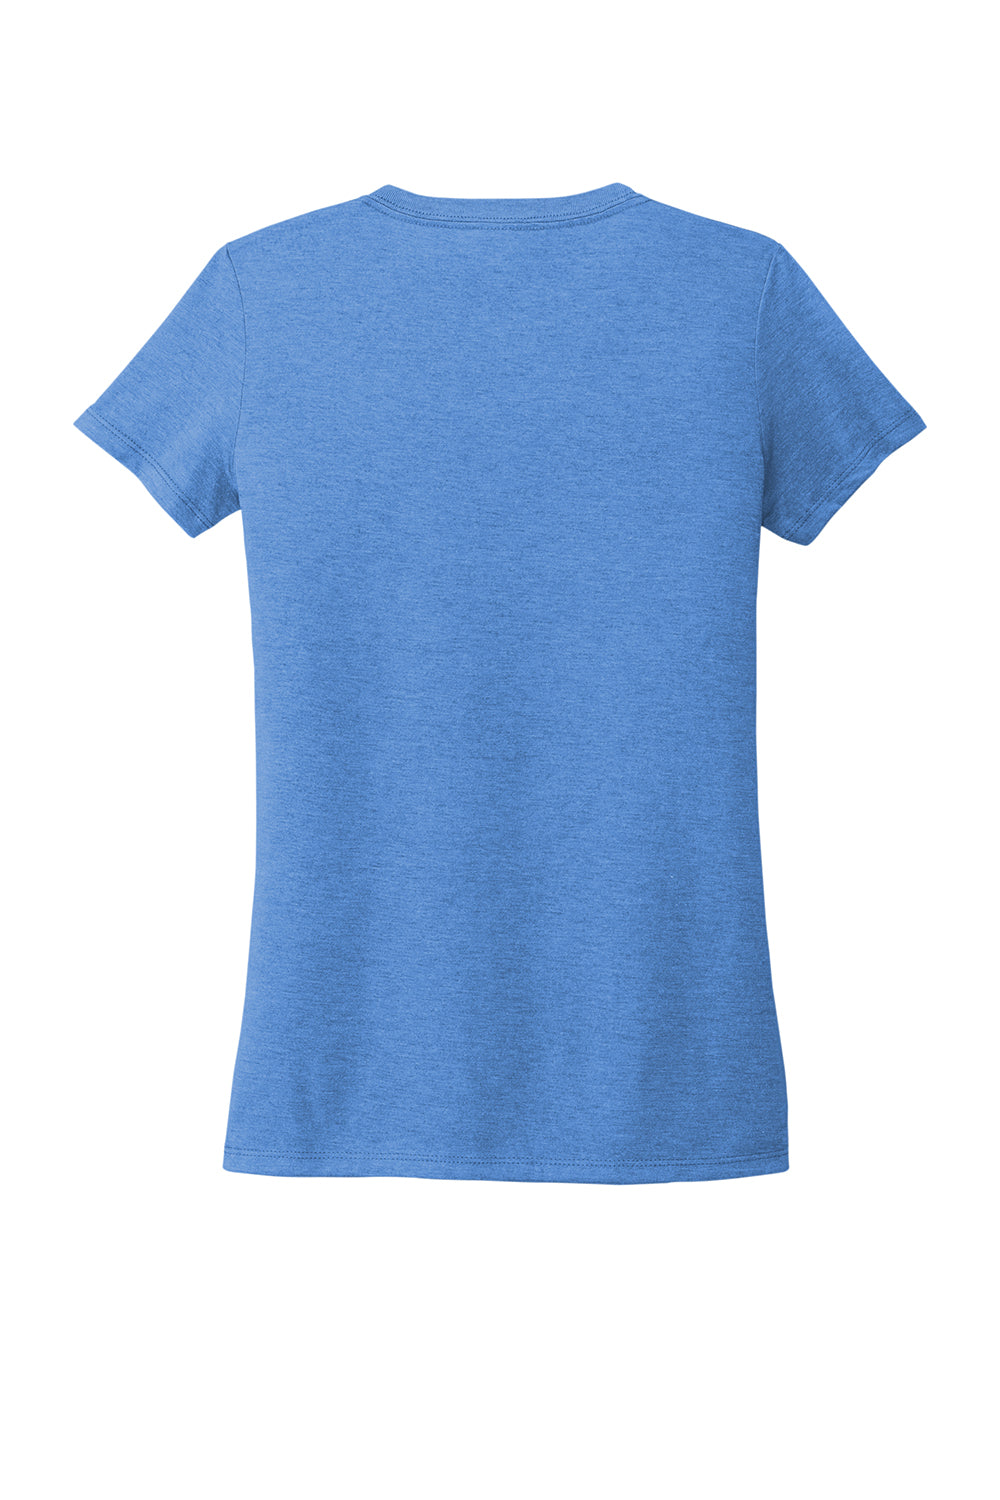 Allmade AL2018 Womens Short Sleeve V-Neck T-Shirt Azure Blue Flat Back